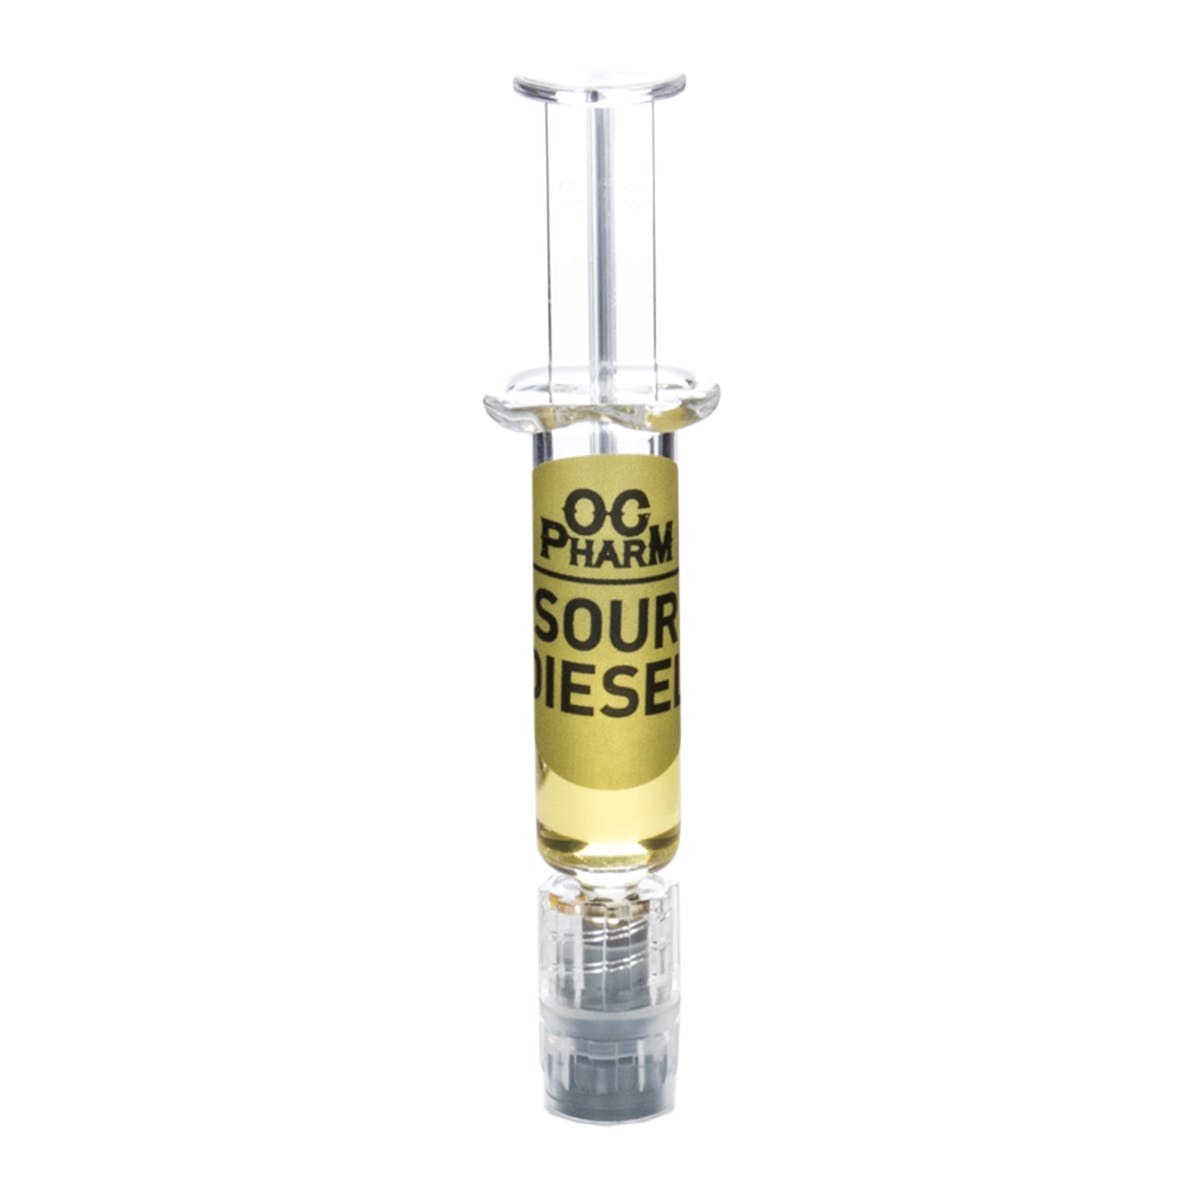 concentrate-oc-pharm-sour-diesel-prefilled-syringe